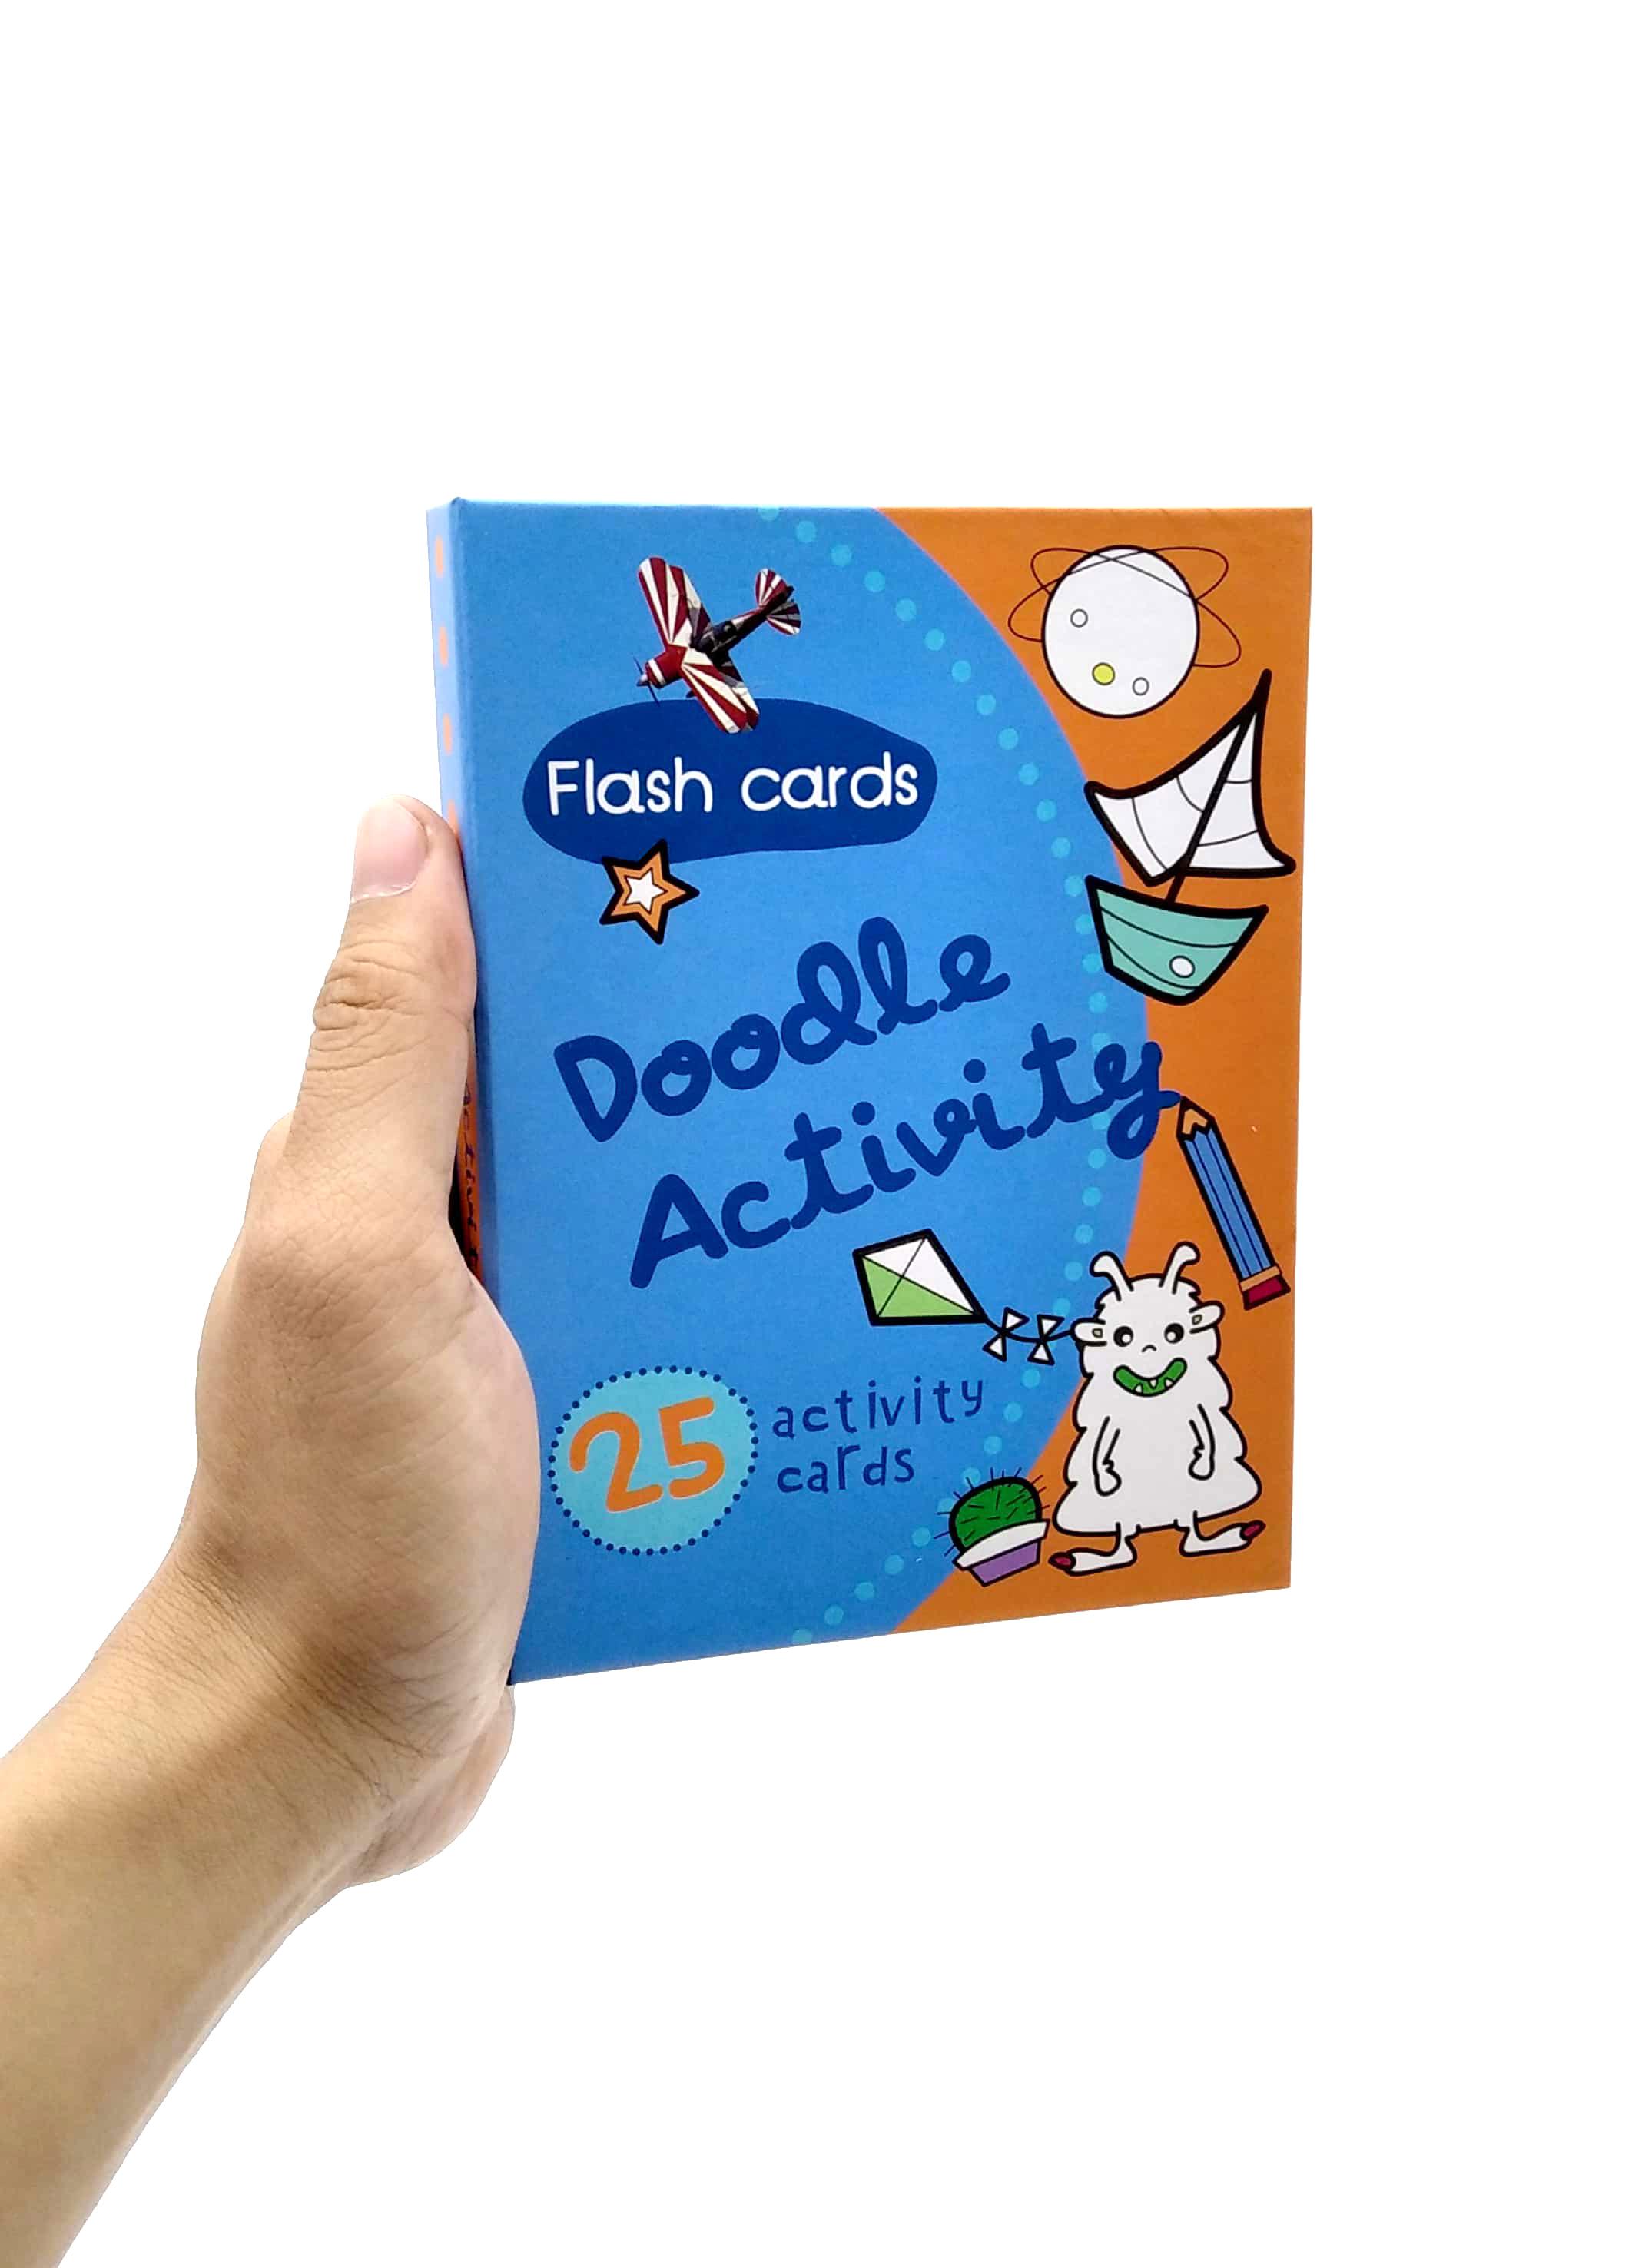 Flash Card - Doodle Activity Blue (25 Activity Cards)